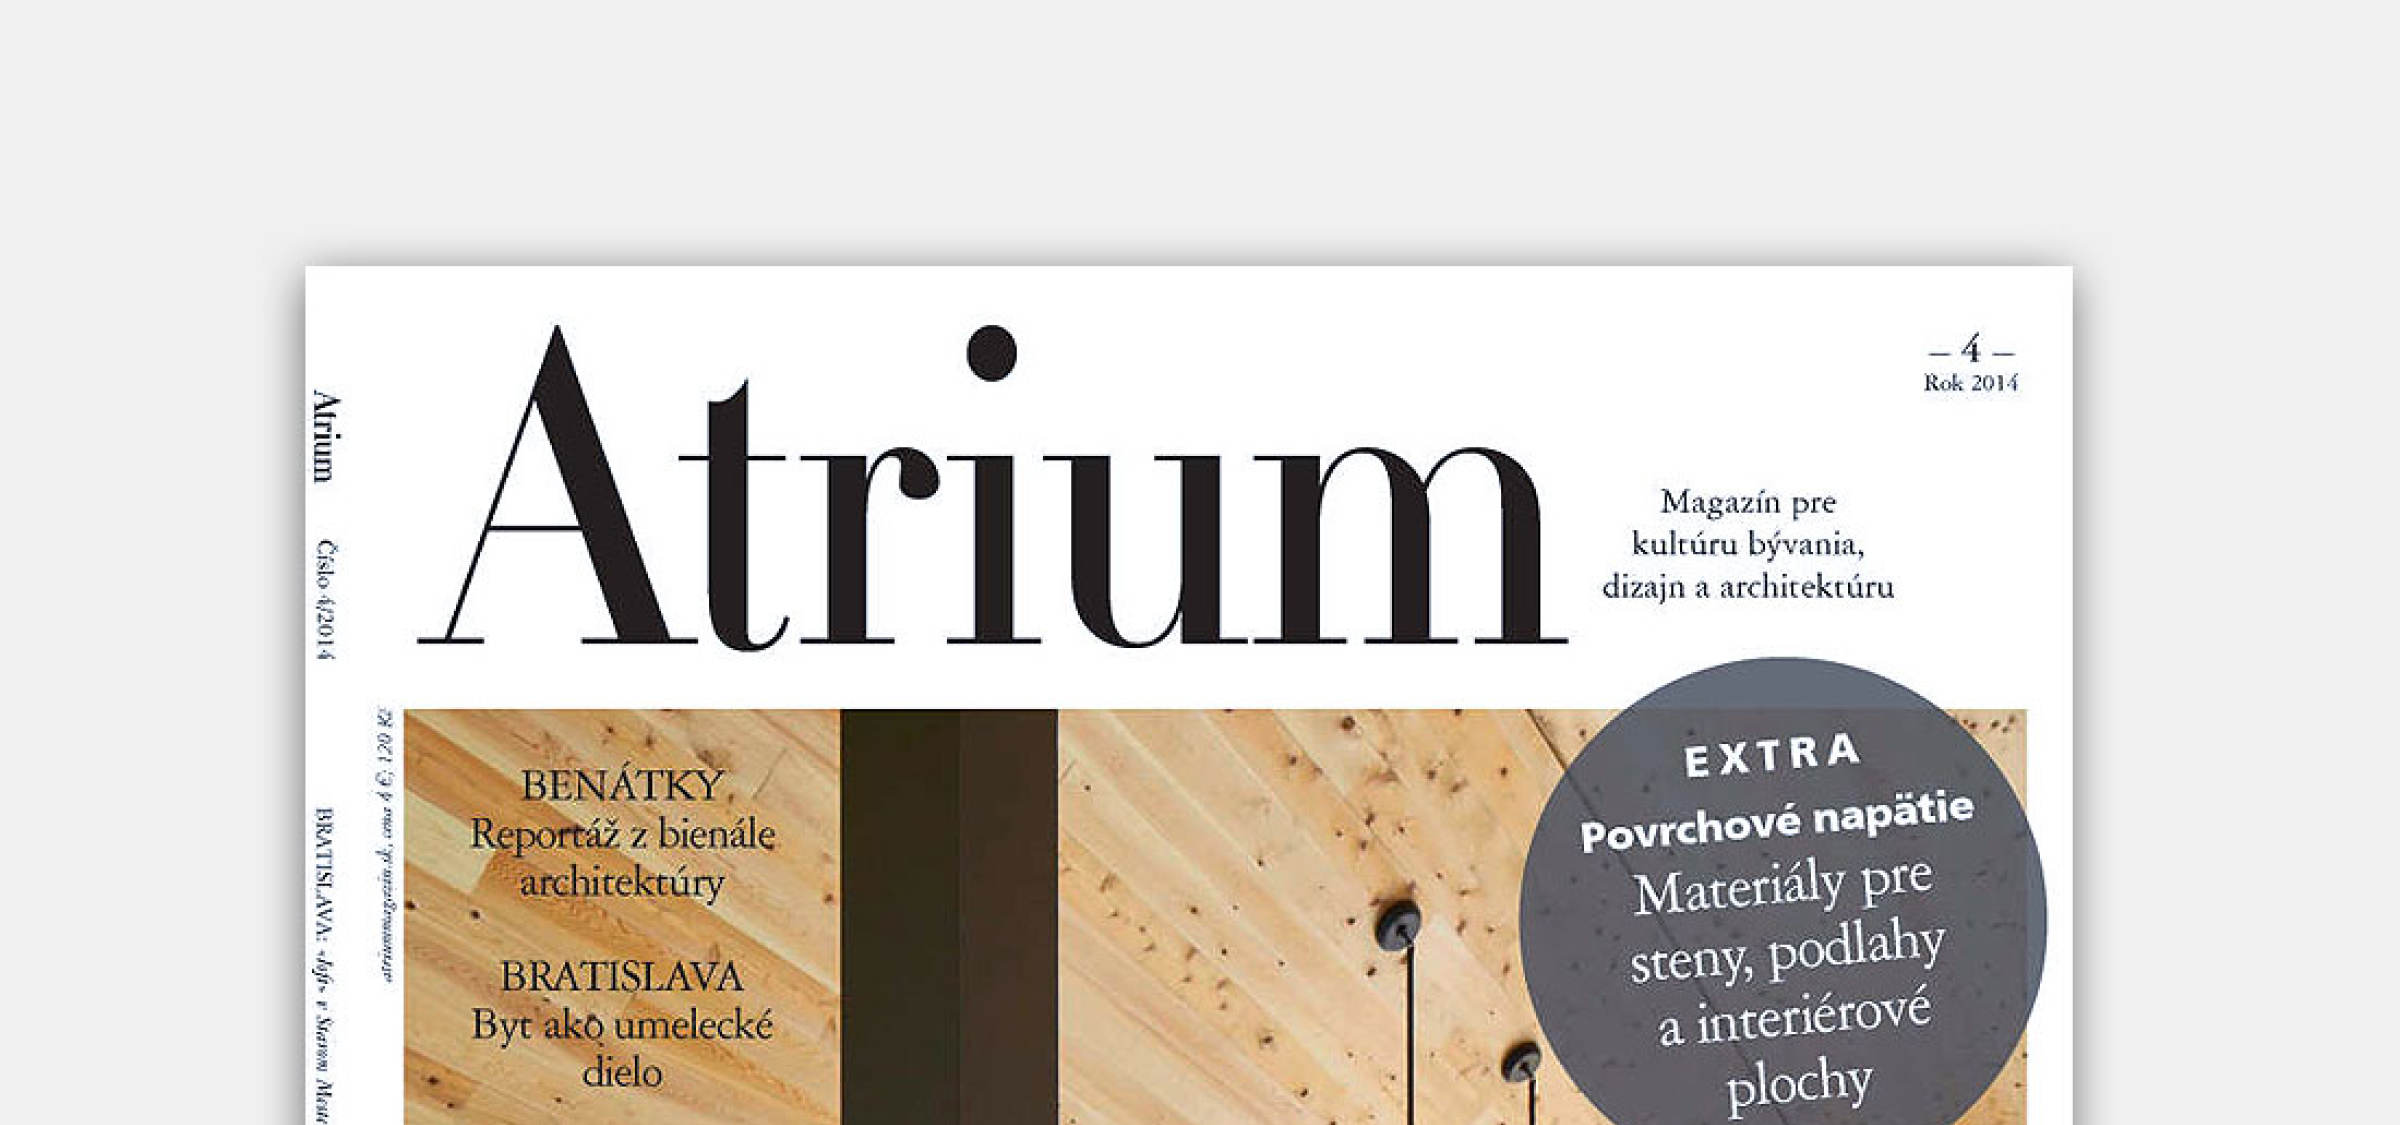 East Side in next issue of Atrium magazine | News | Atrium Architekti